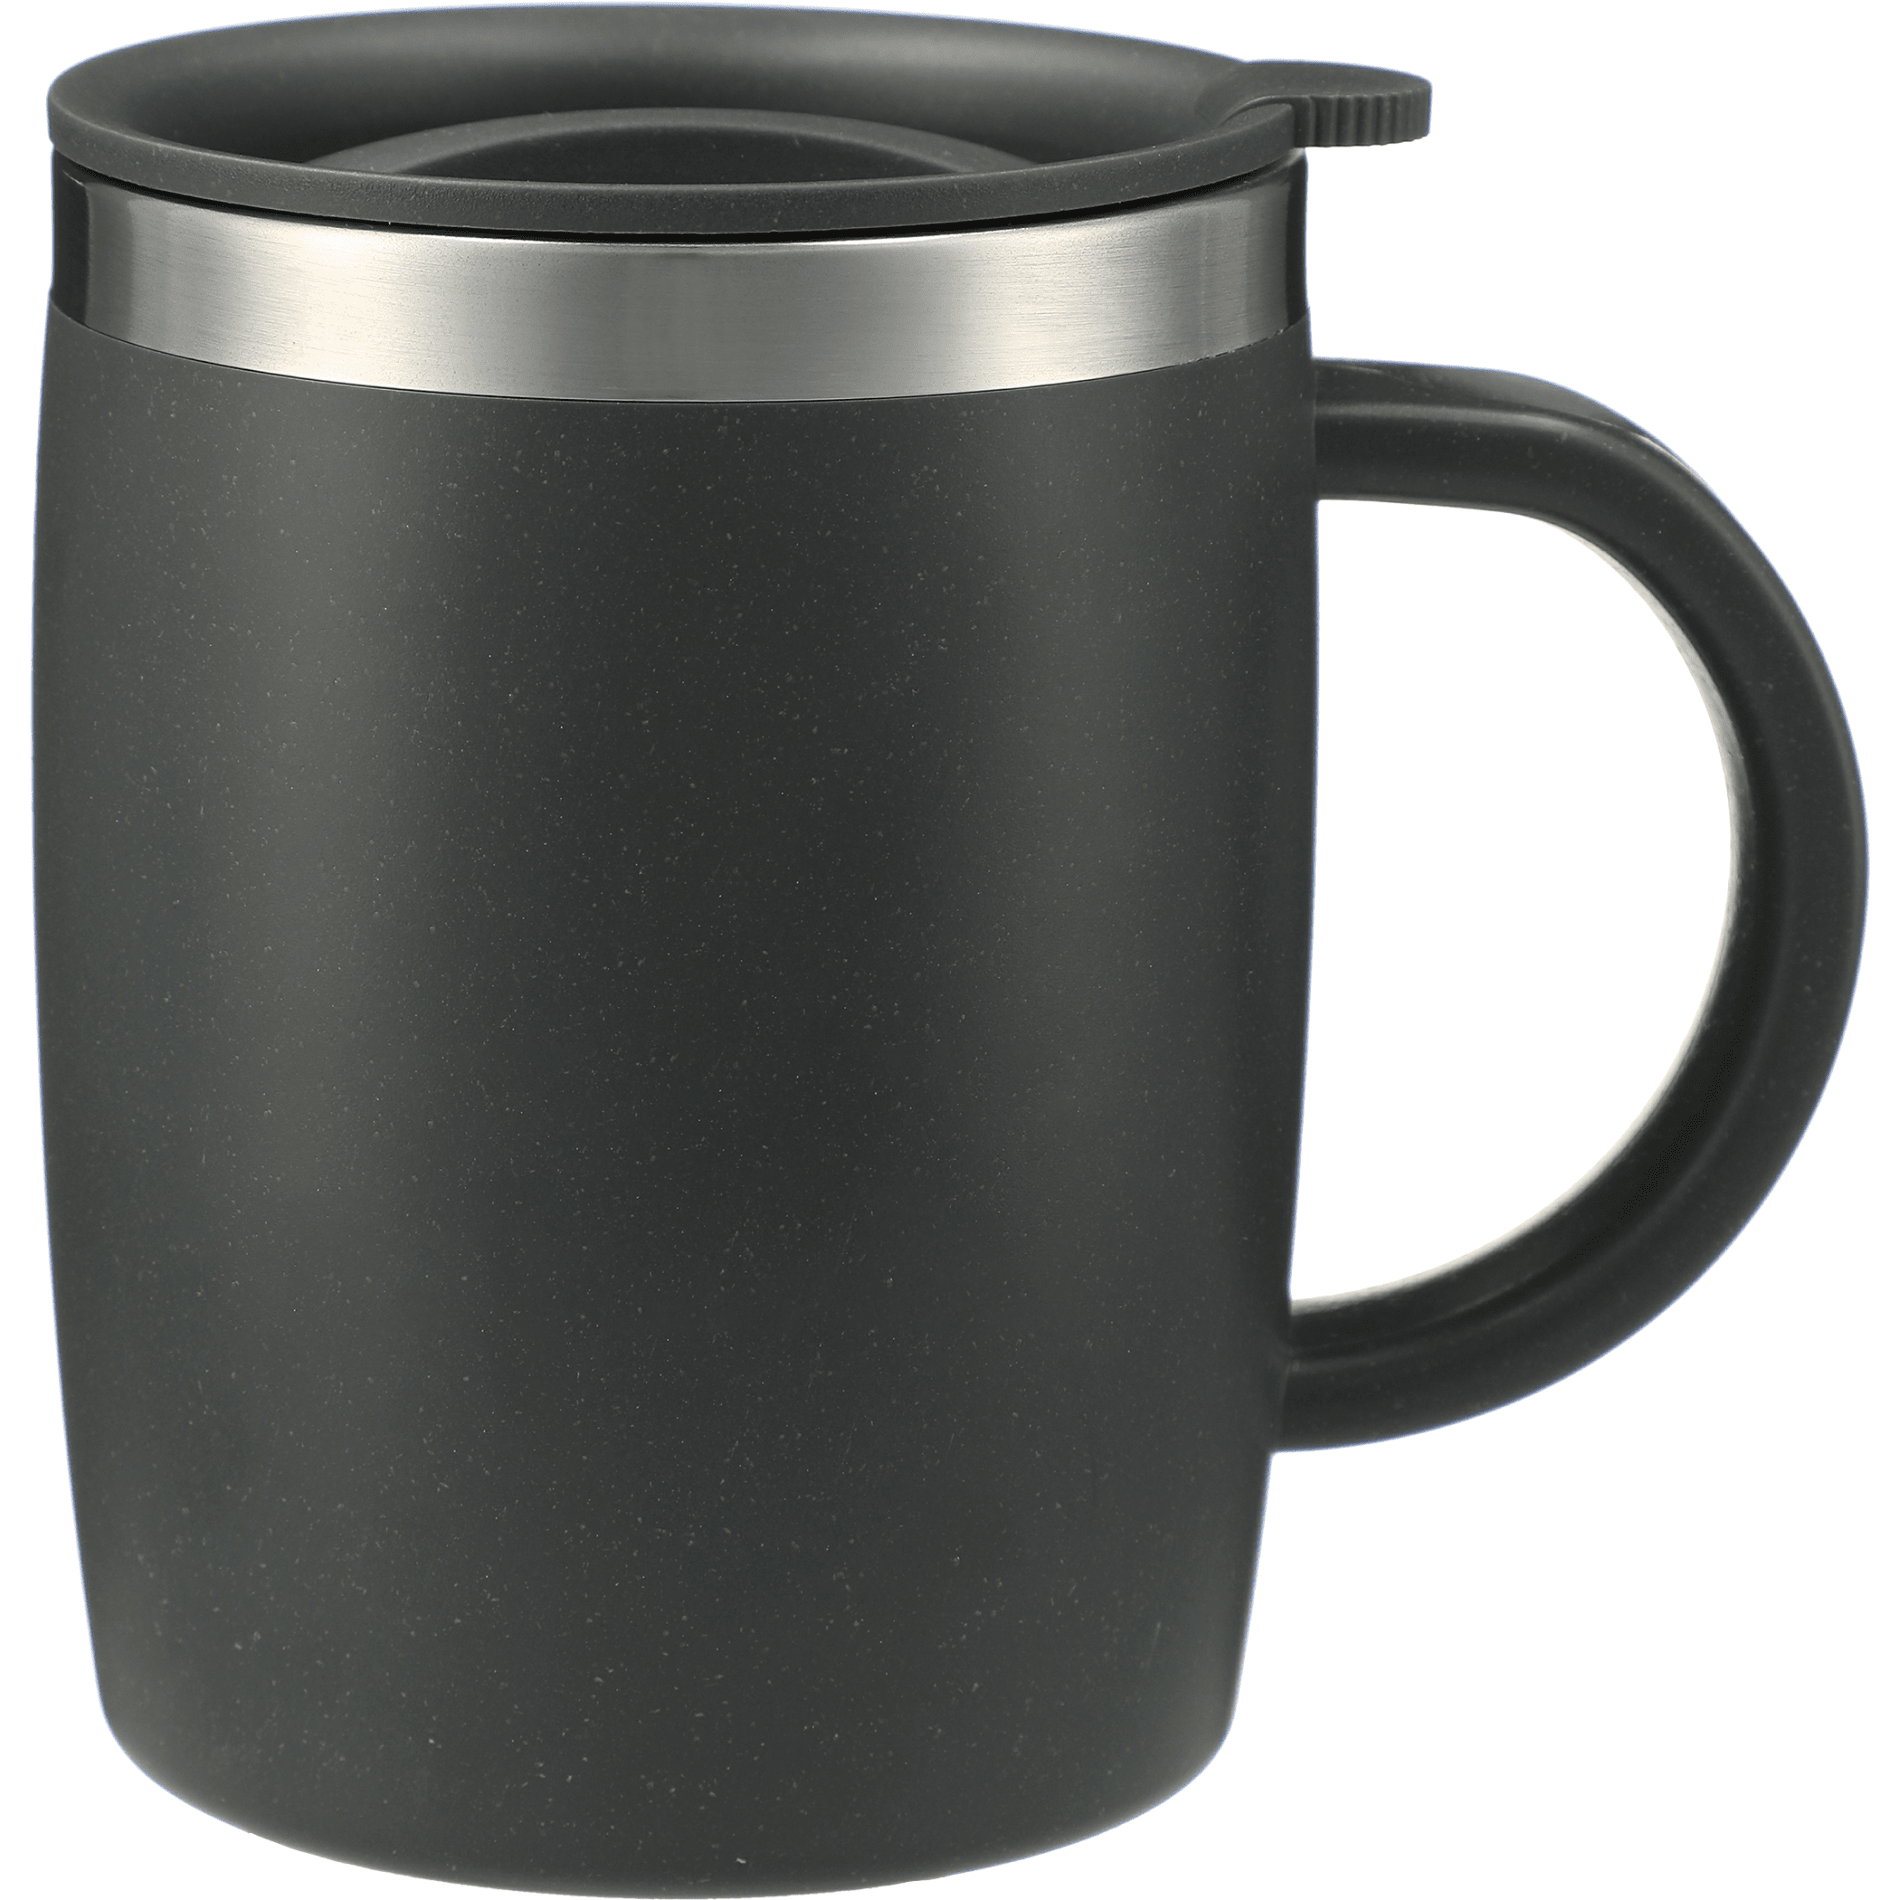 LEEDS 1628-46 - Dagon Wheat Straw Mug w/ Stainless Liner 14oz